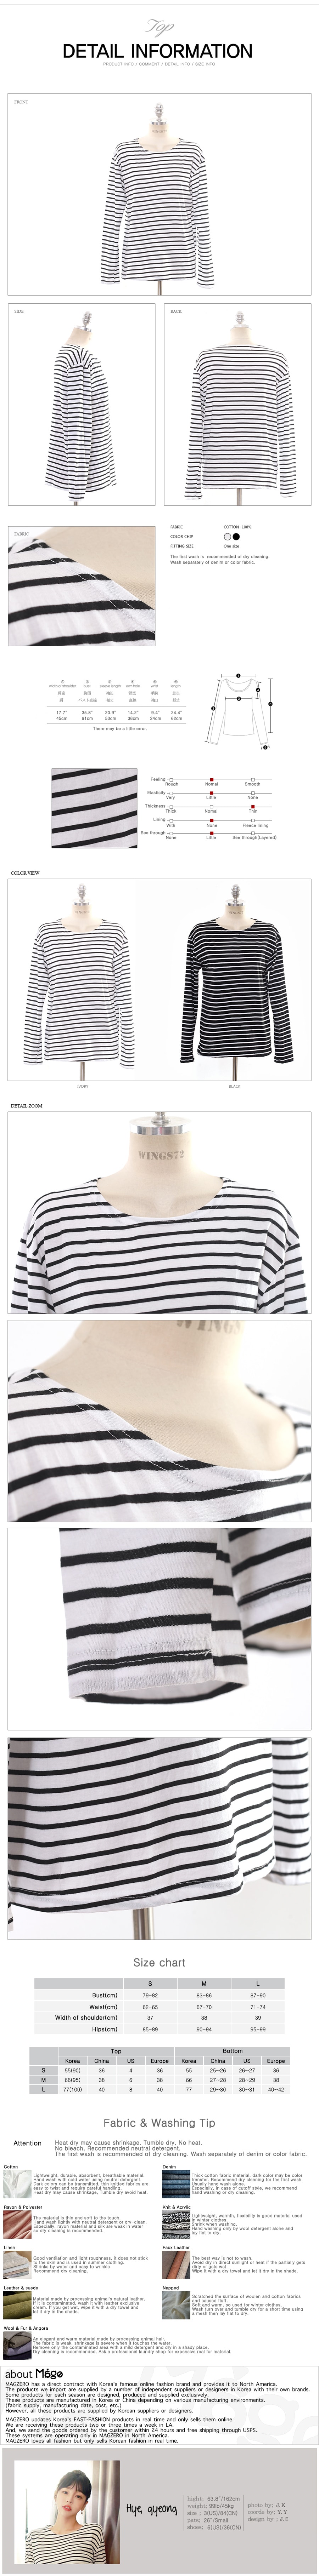 [Limited Quantity Sale] Boat-Neck Striped T-Shirt #Black One Size(S-M)